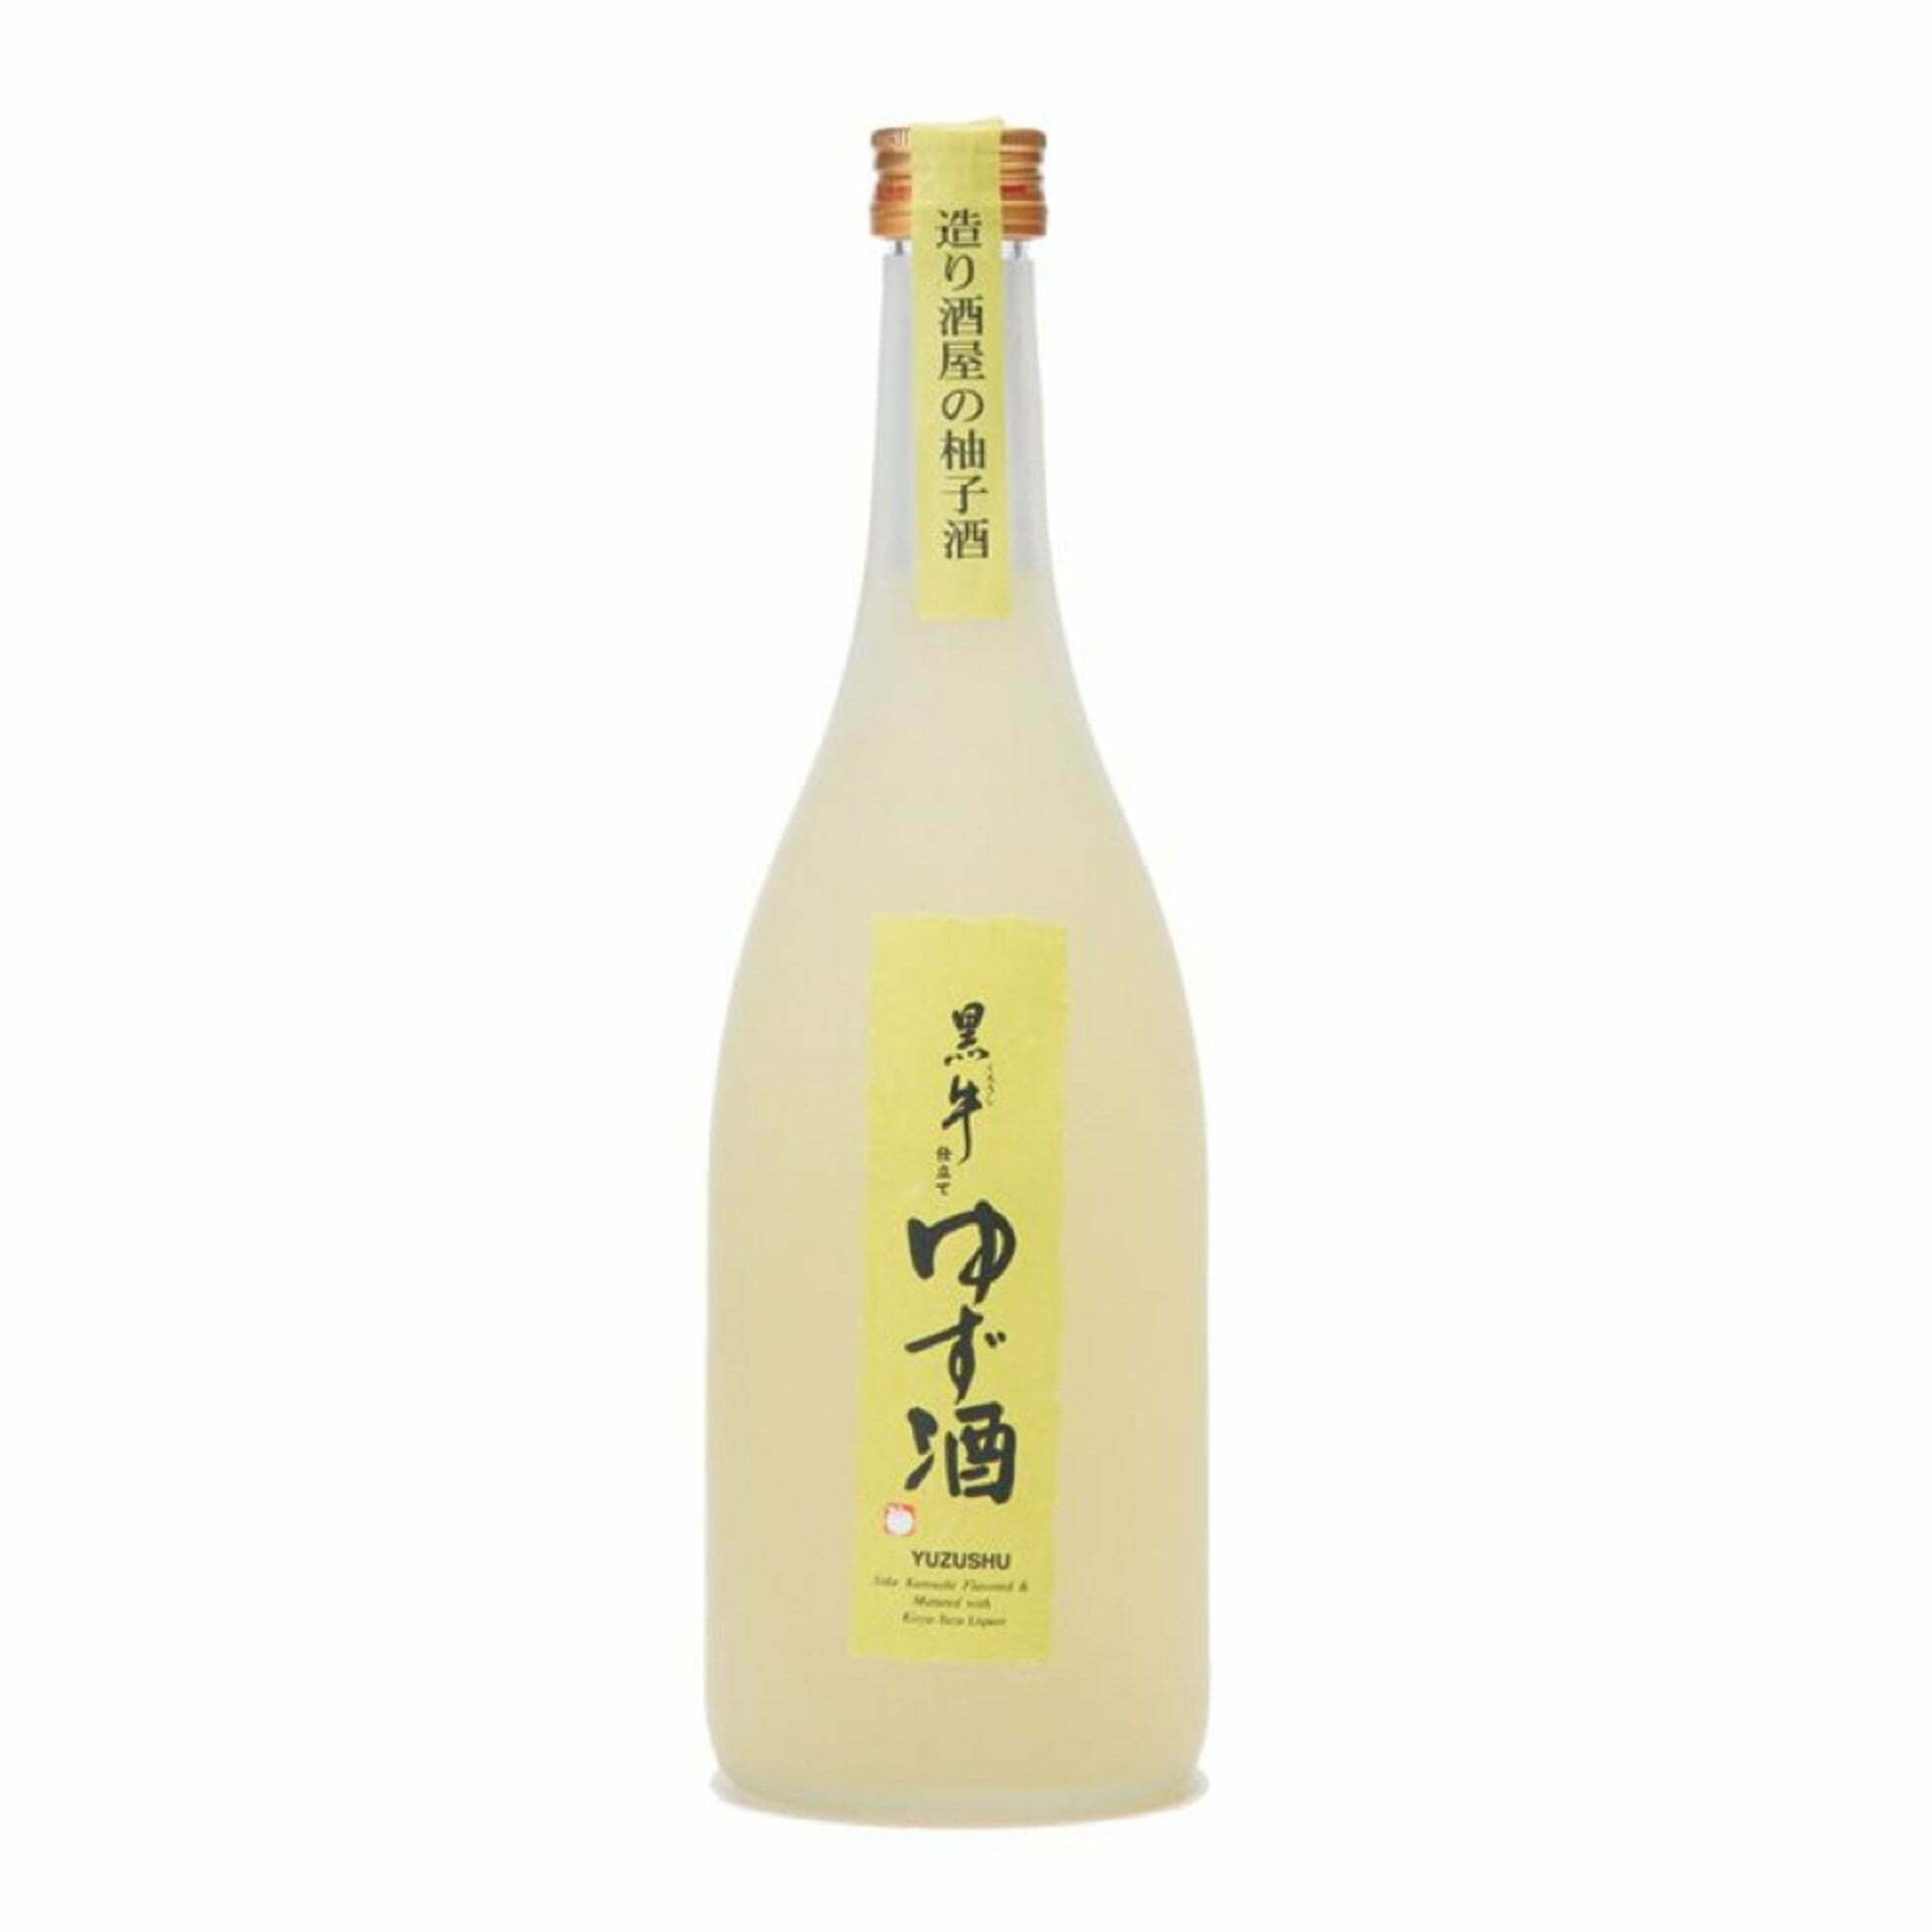 黑牛 特製 柚子酒 Kuroushi Shitate Yuzu Liqueur (1x72cl) - TwoMoreGlasses.com